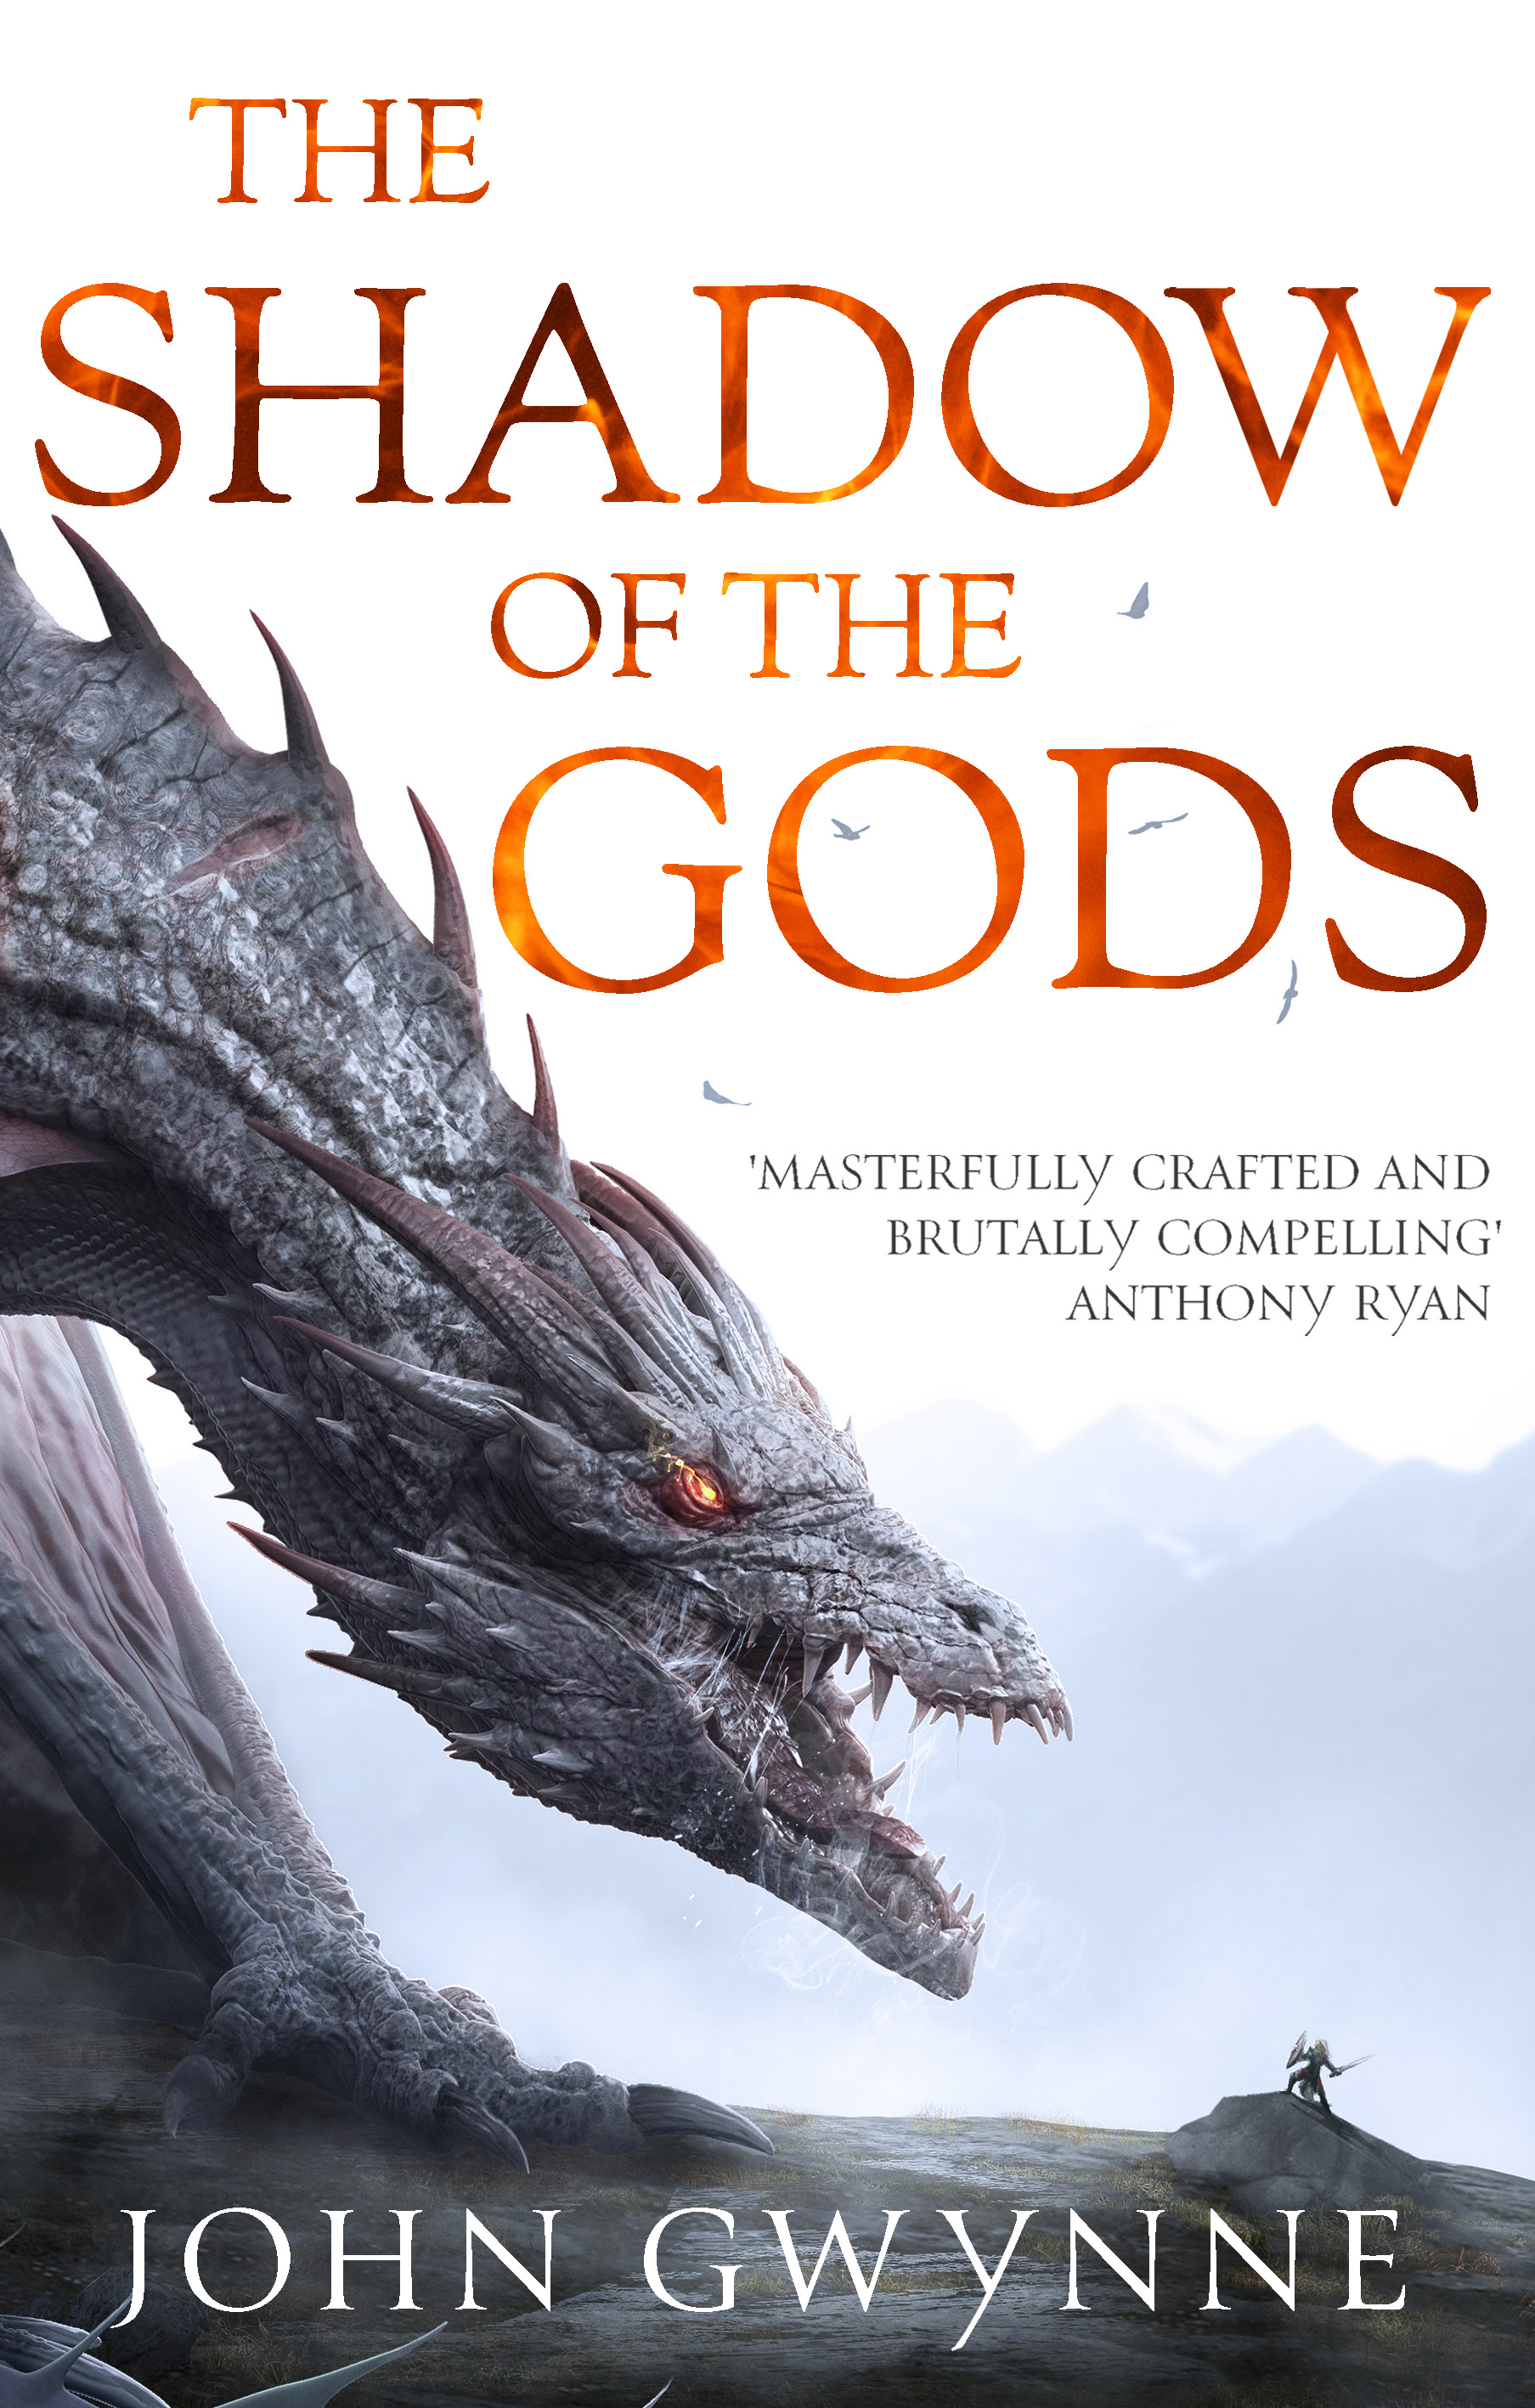 The Shadow of the Gods (The Bloodsworn Saga, #1) in Kindle/PDF/EPUB